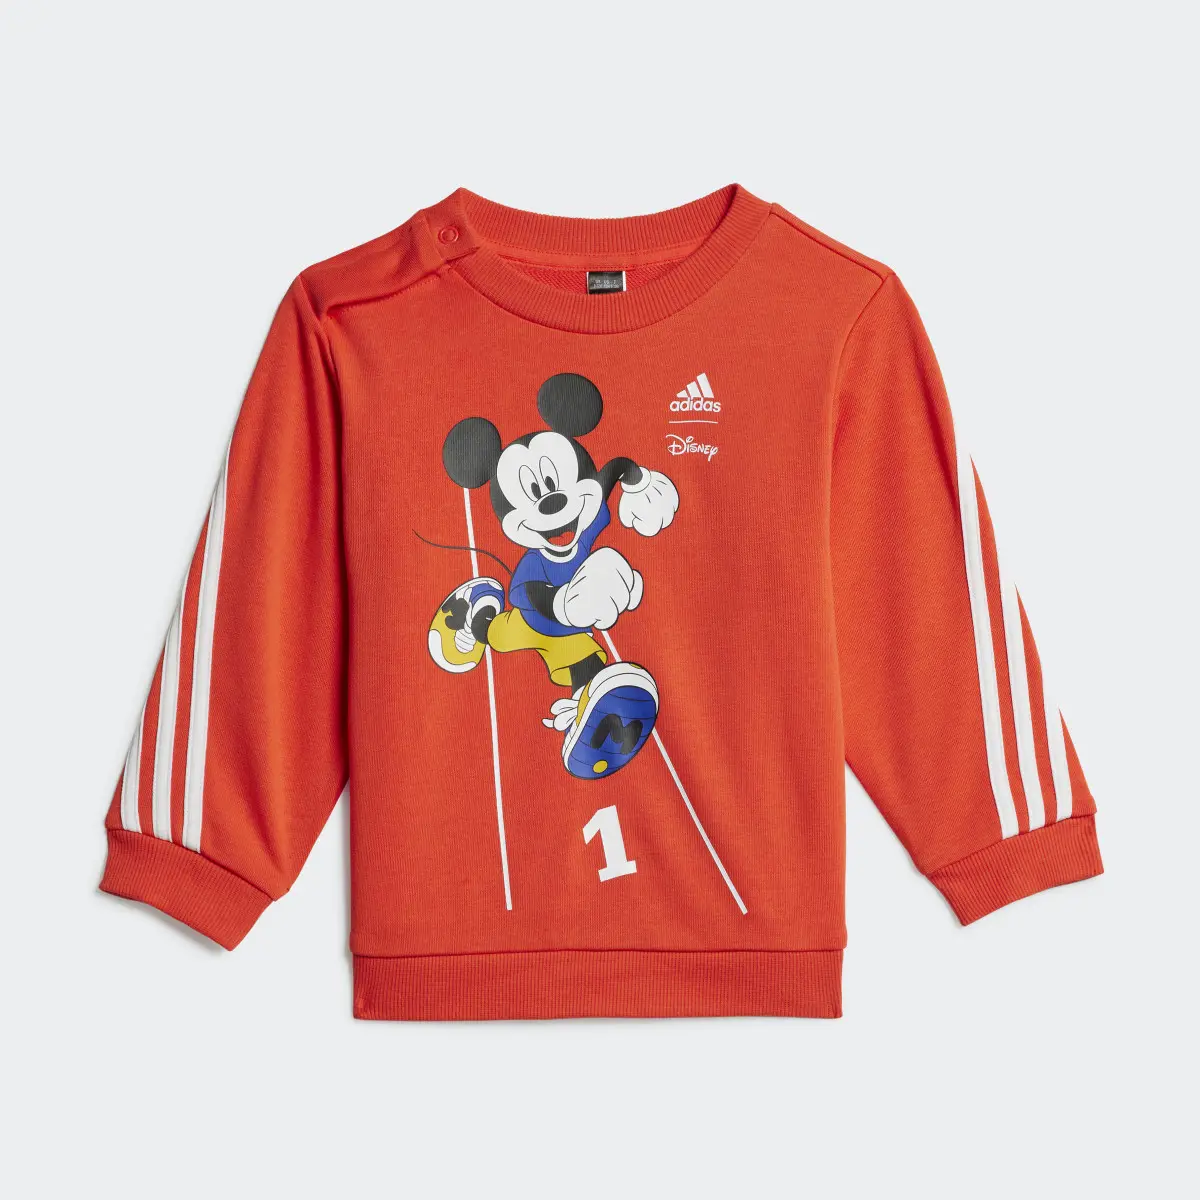 Adidas x Disney Mickey Mouse Jogger. 3